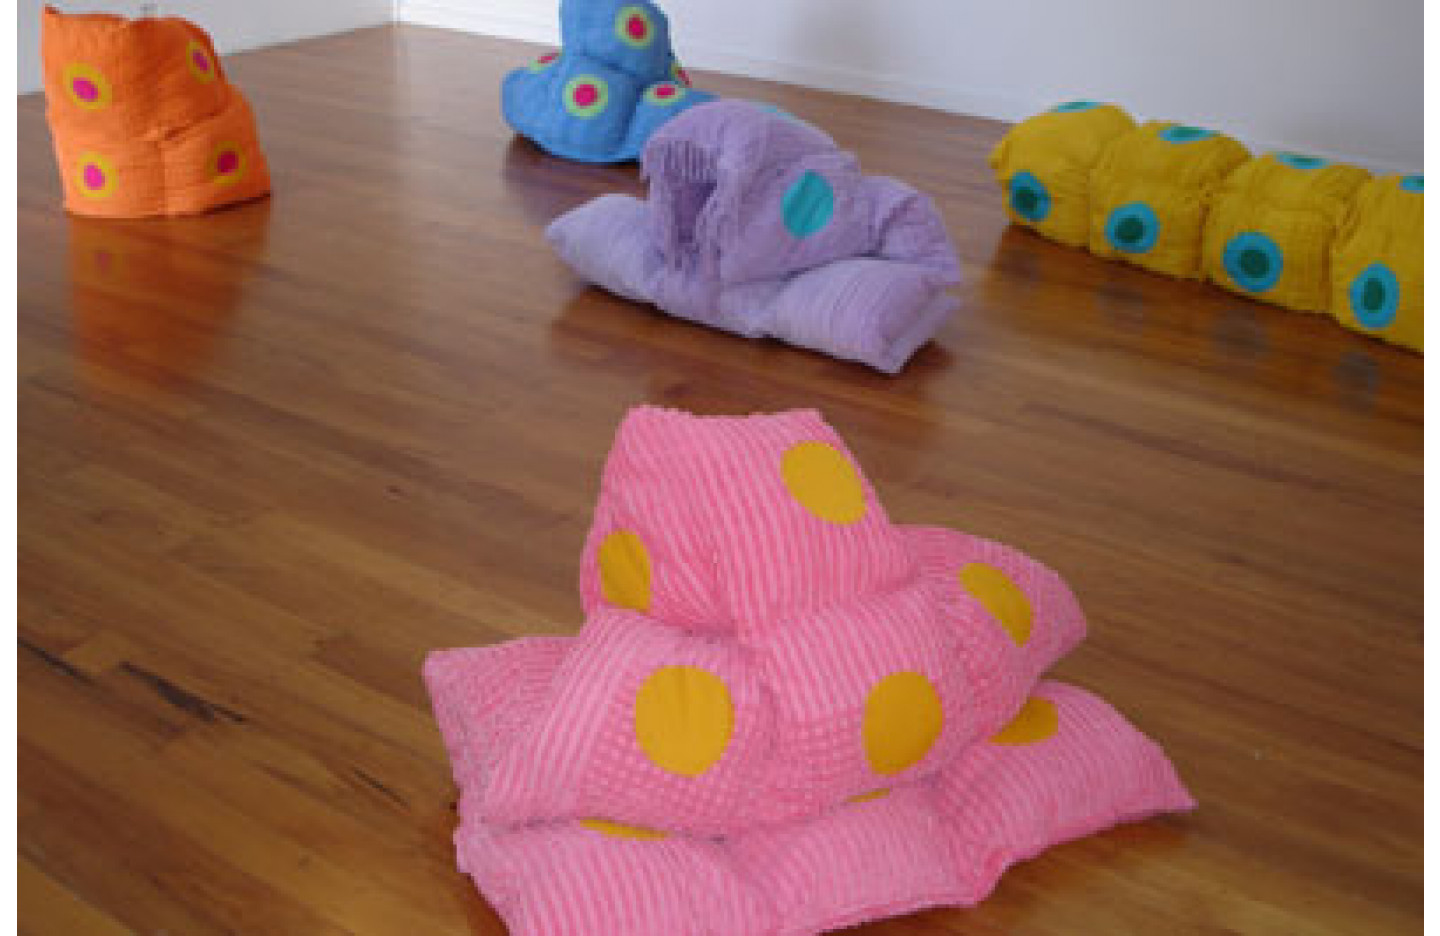 Home Improvements, Ramp Gallery (2006)